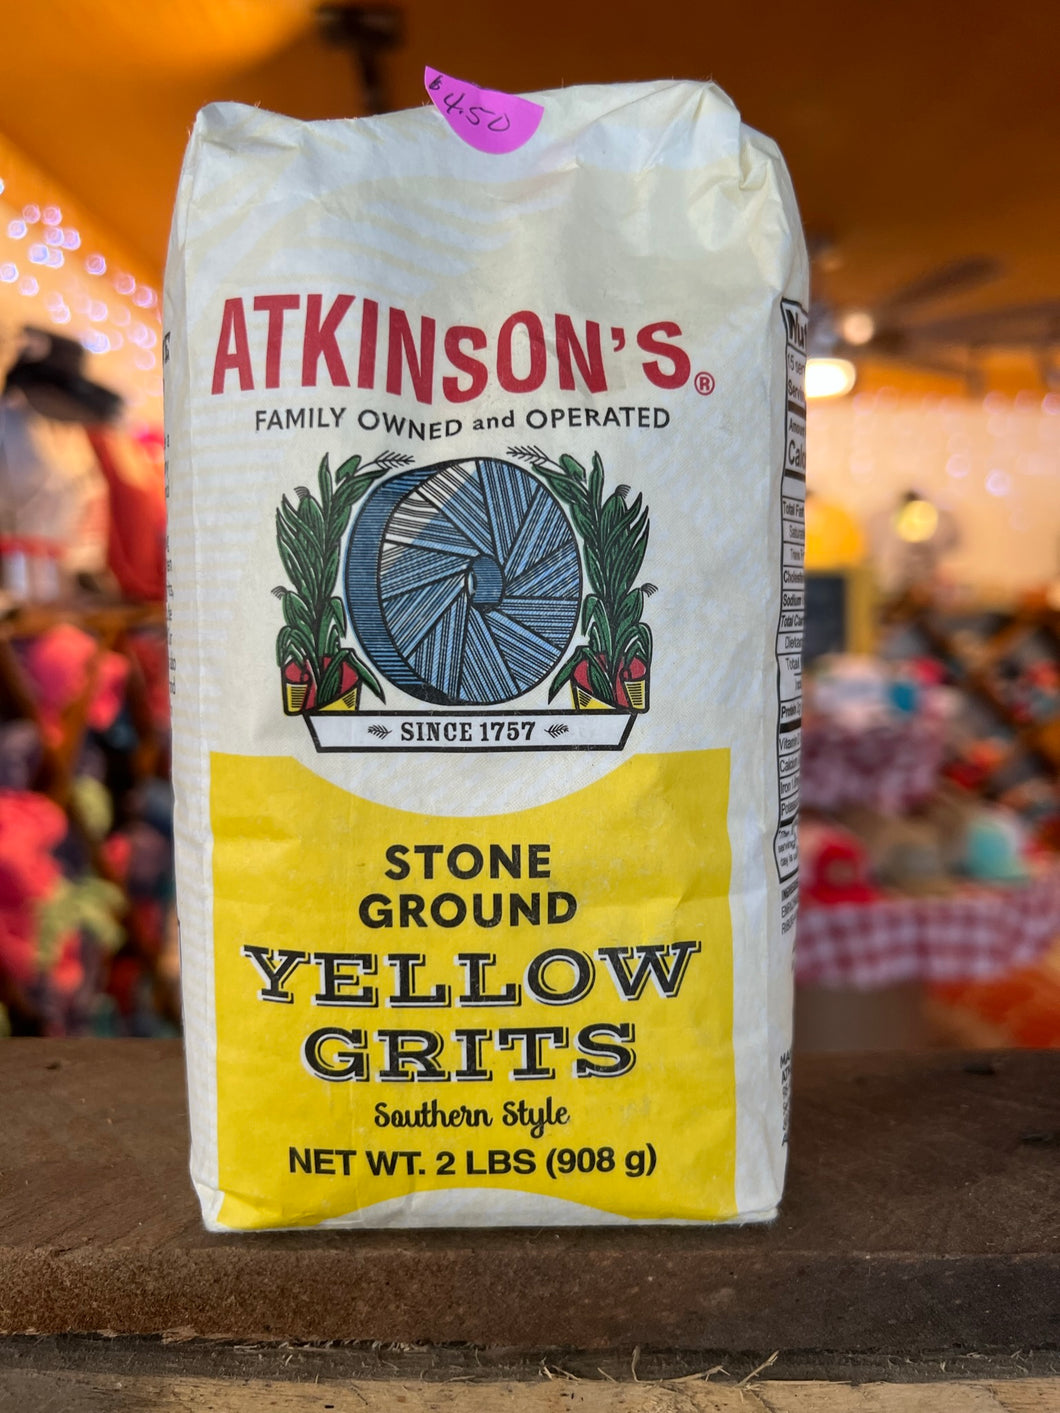 Atkinson's stone ground yellow grits